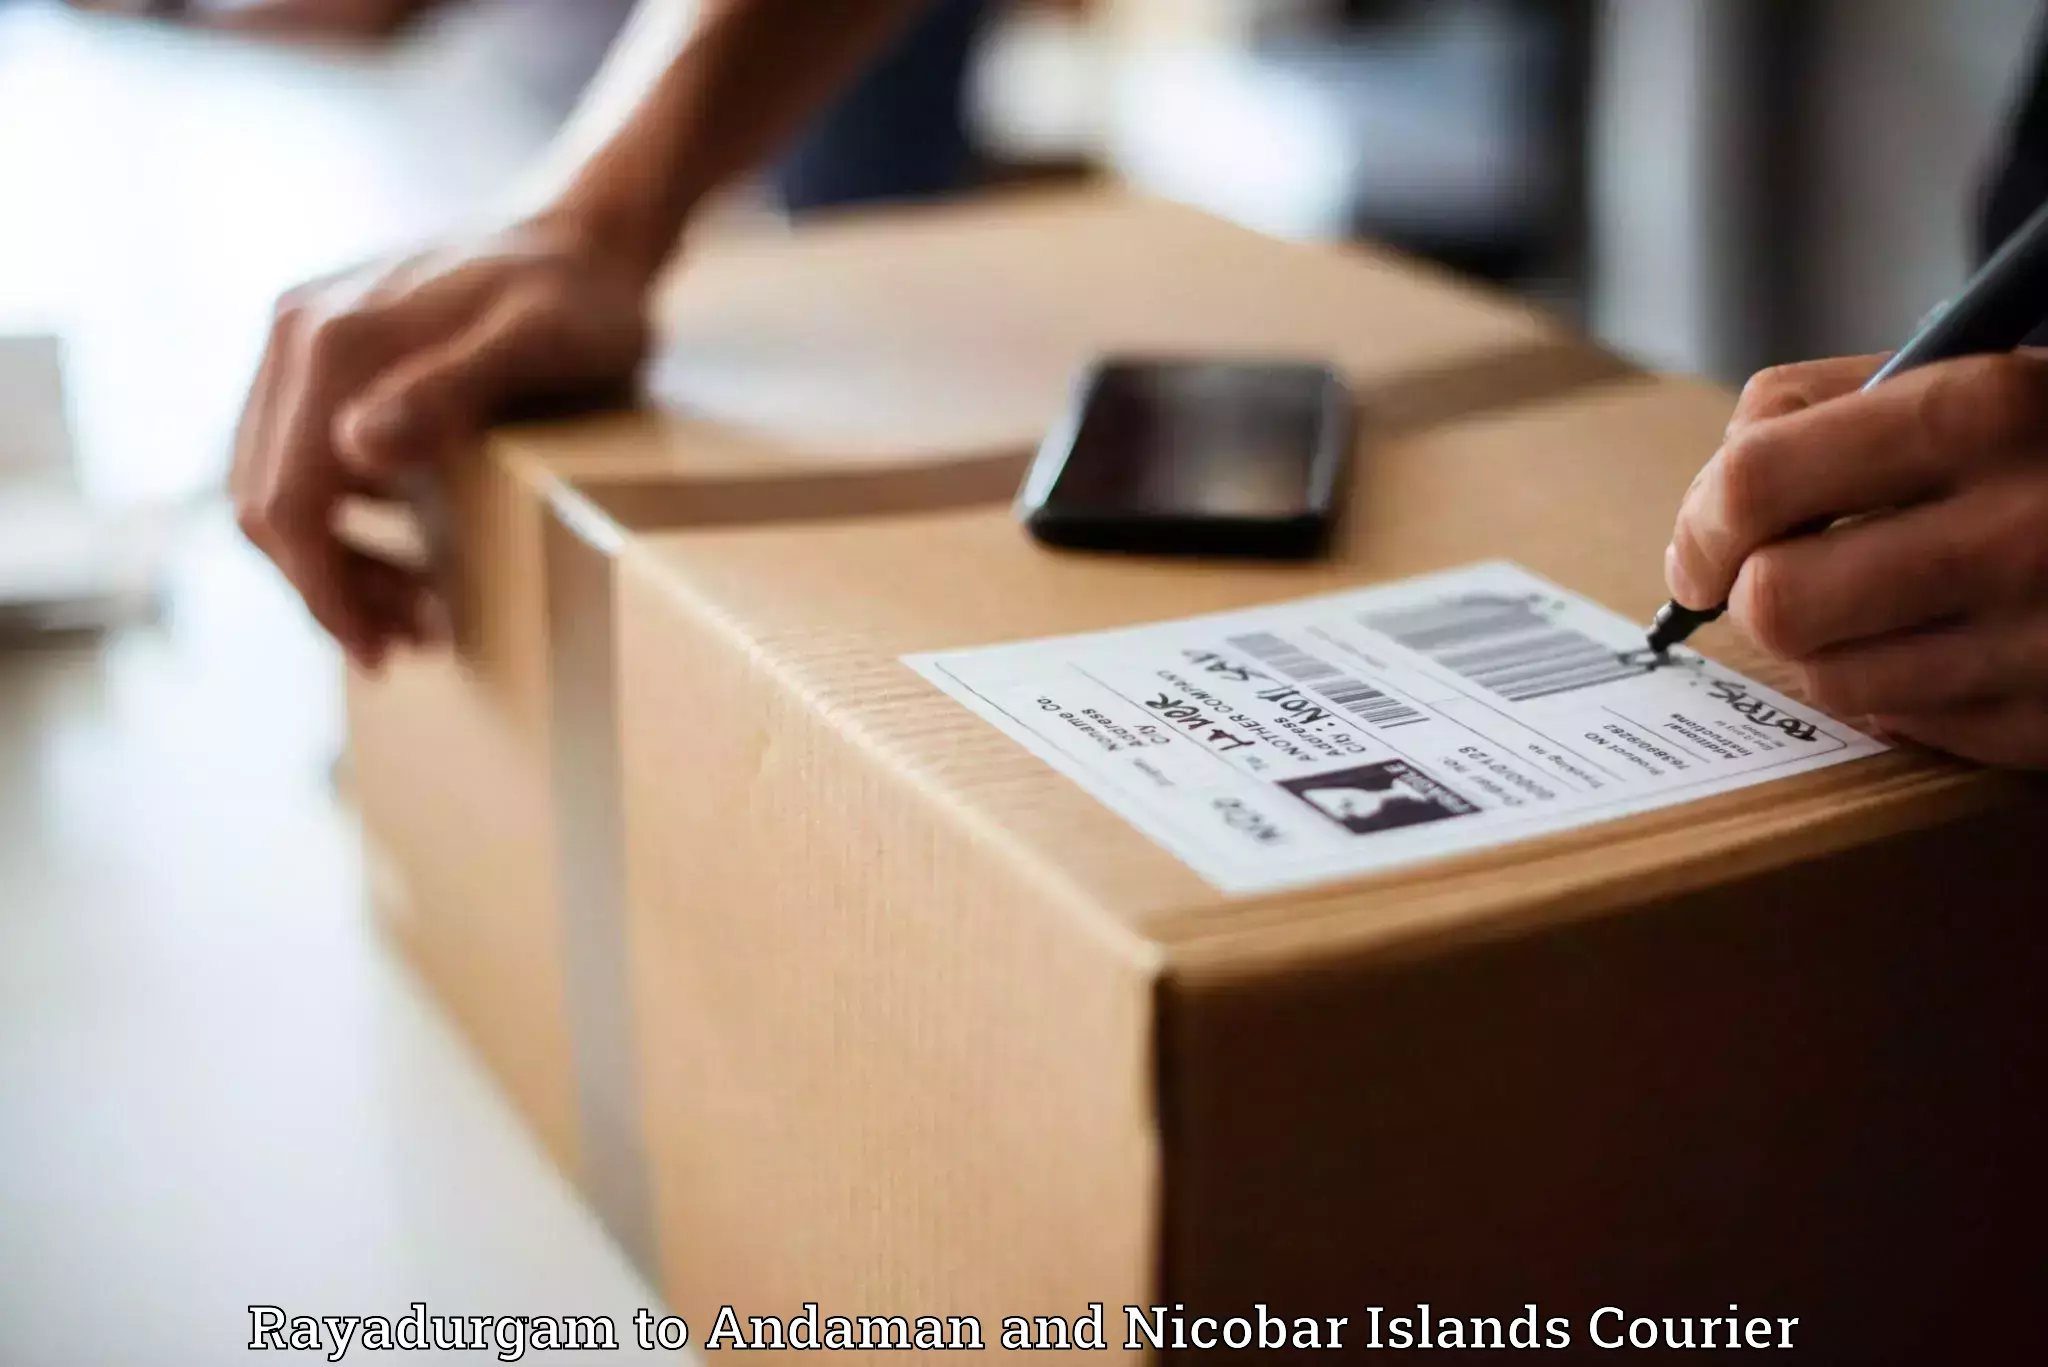 Efficient parcel tracking Rayadurgam to Andaman and Nicobar Islands